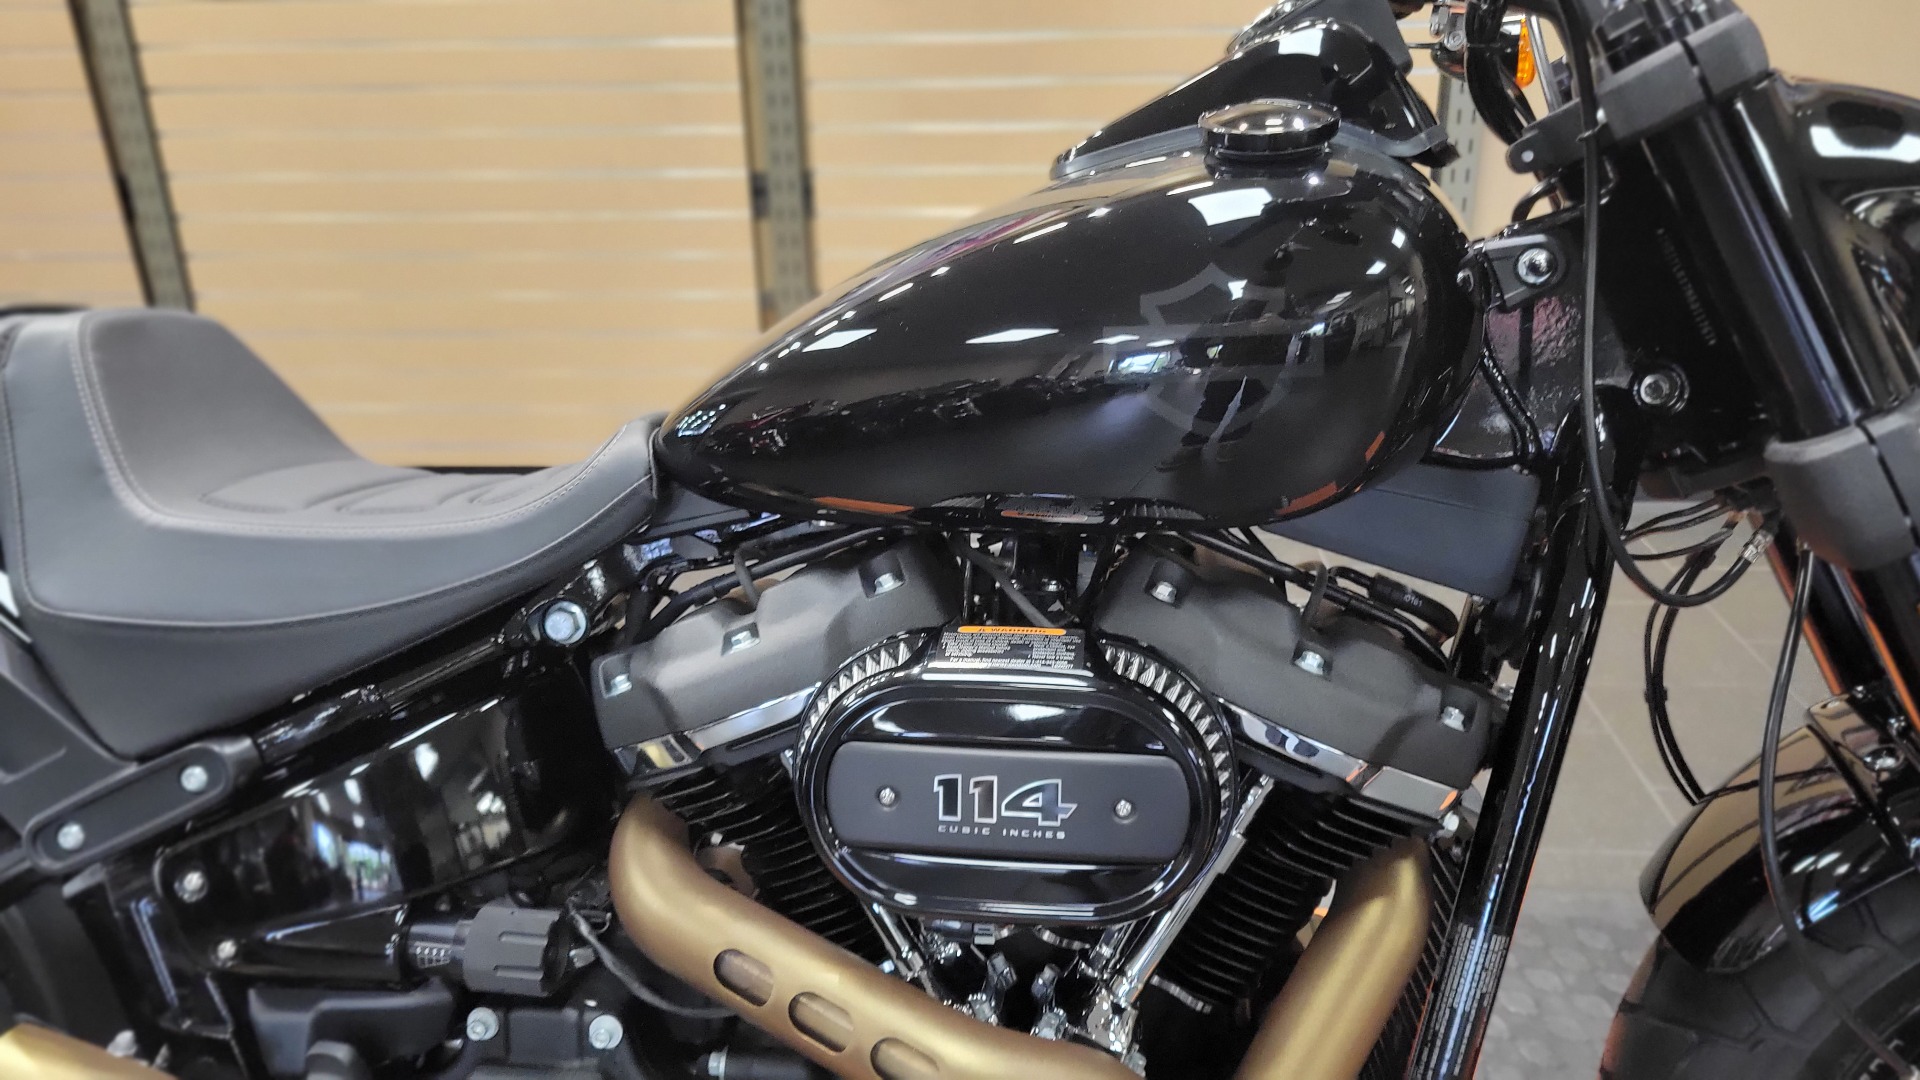 2021 Harley-Davidson Fat Bob® 114 in The Woodlands, Texas - Photo 7